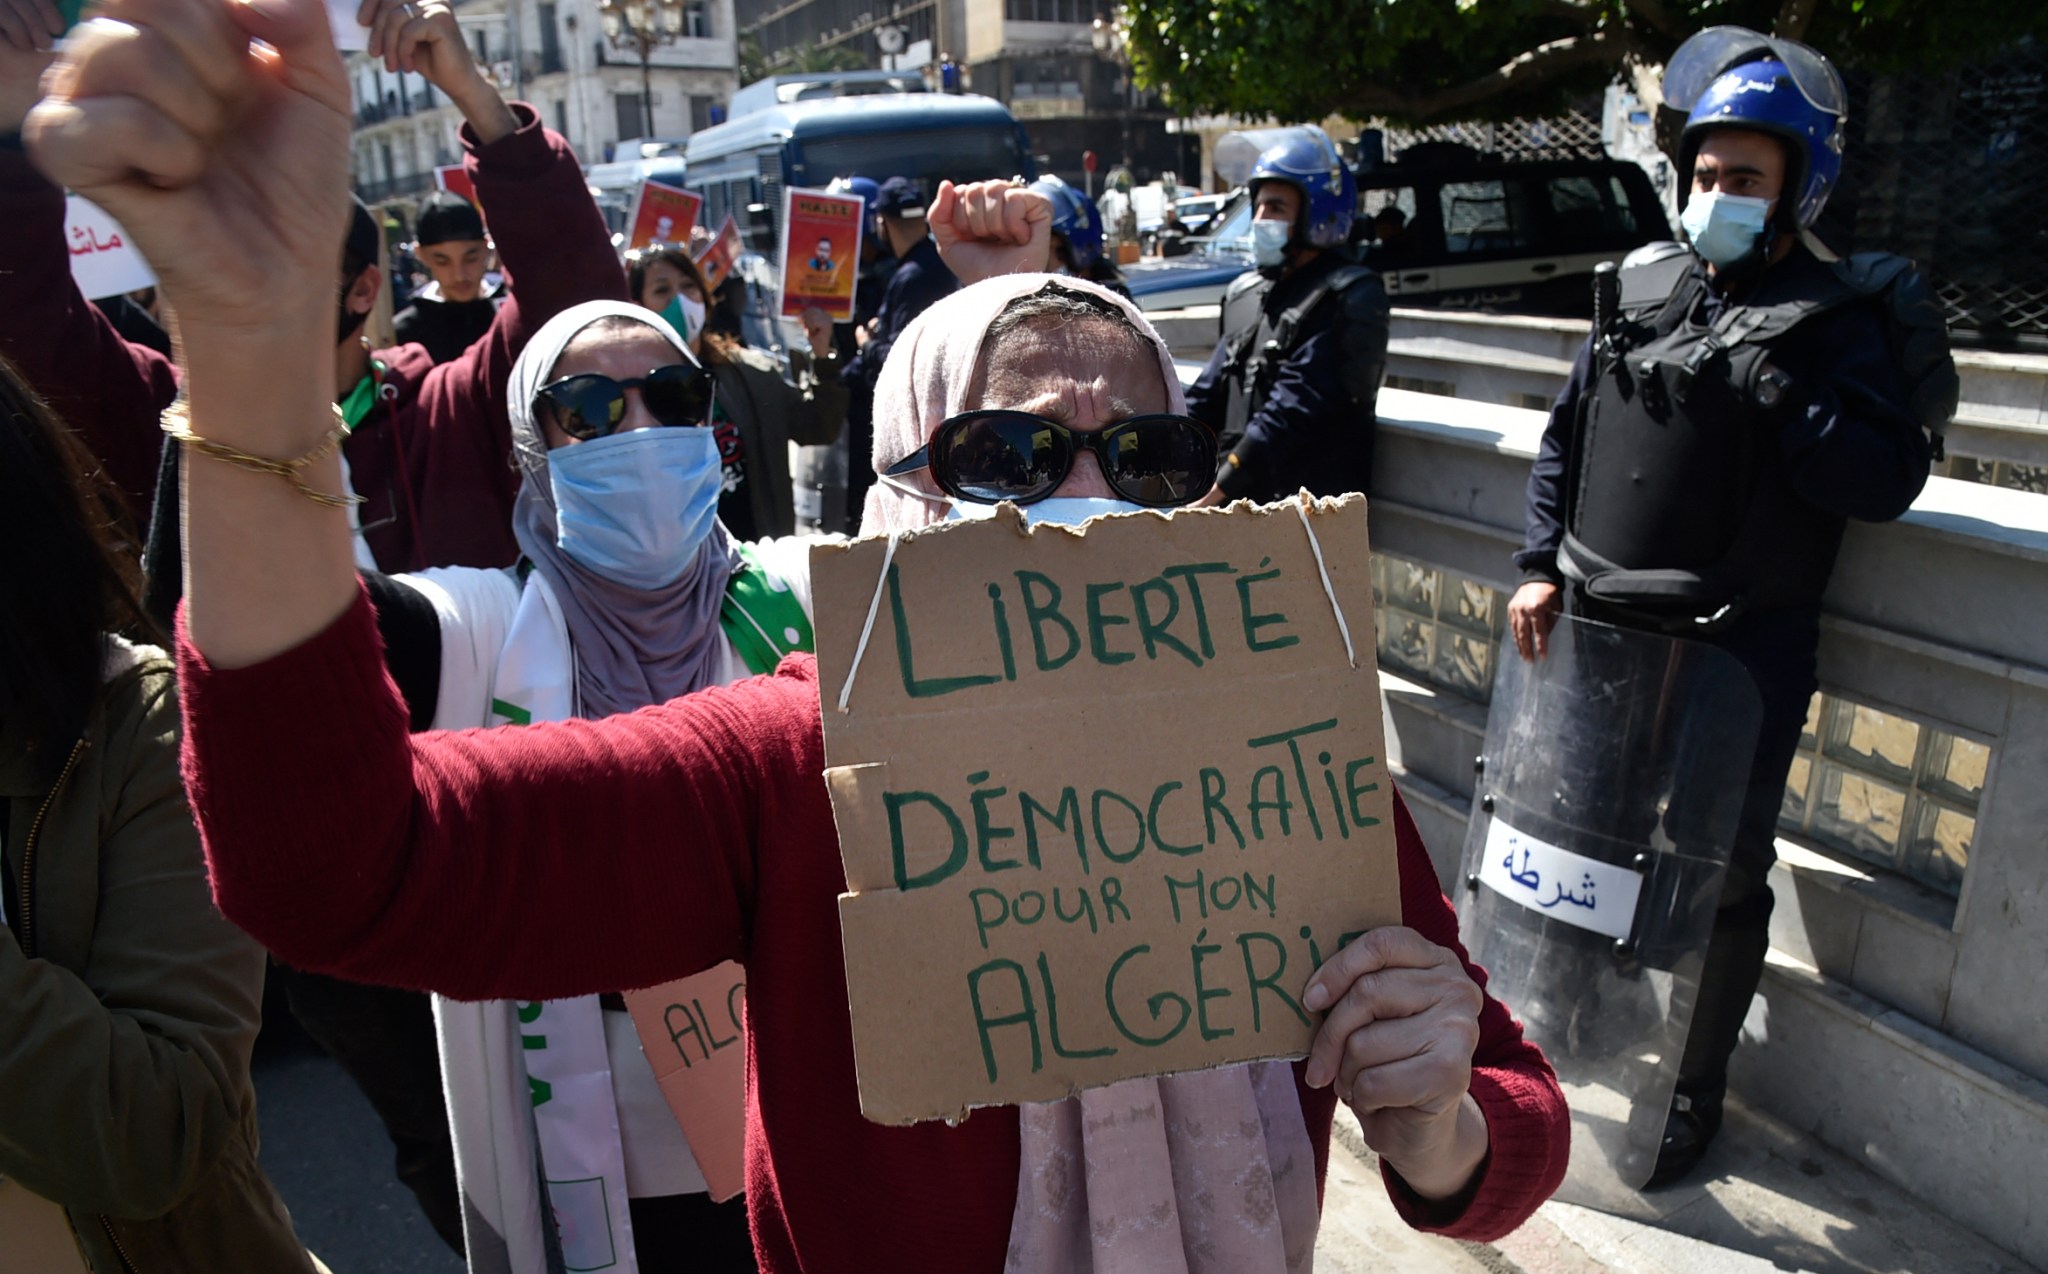 Algerian pro-democracy demonstrator